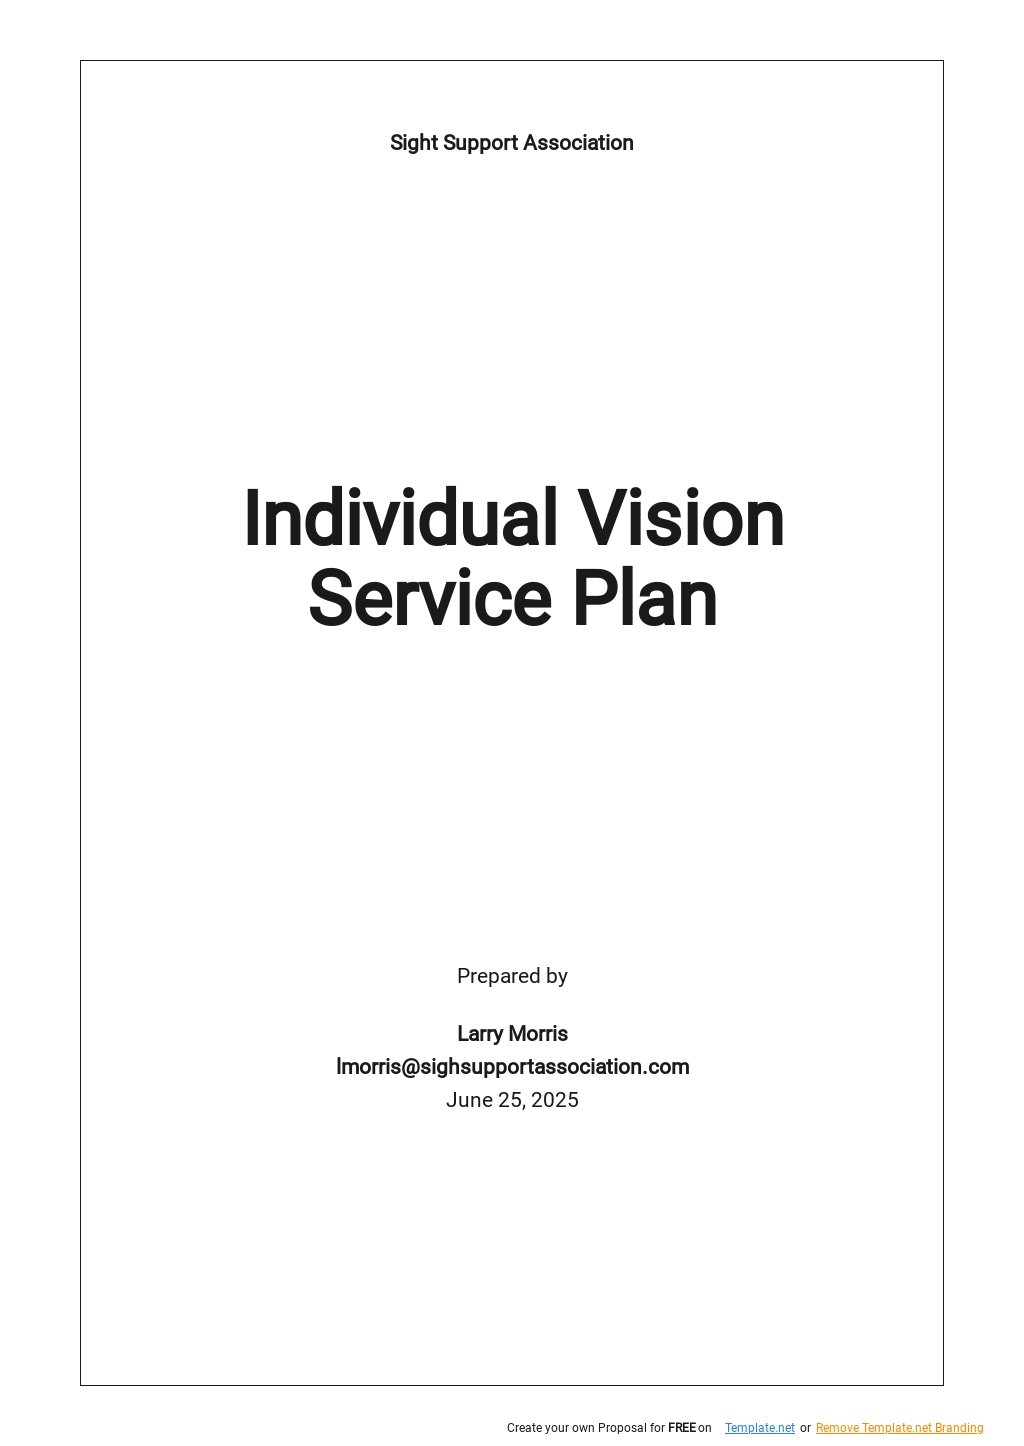 Individual Vision Service Plan Template.jpe